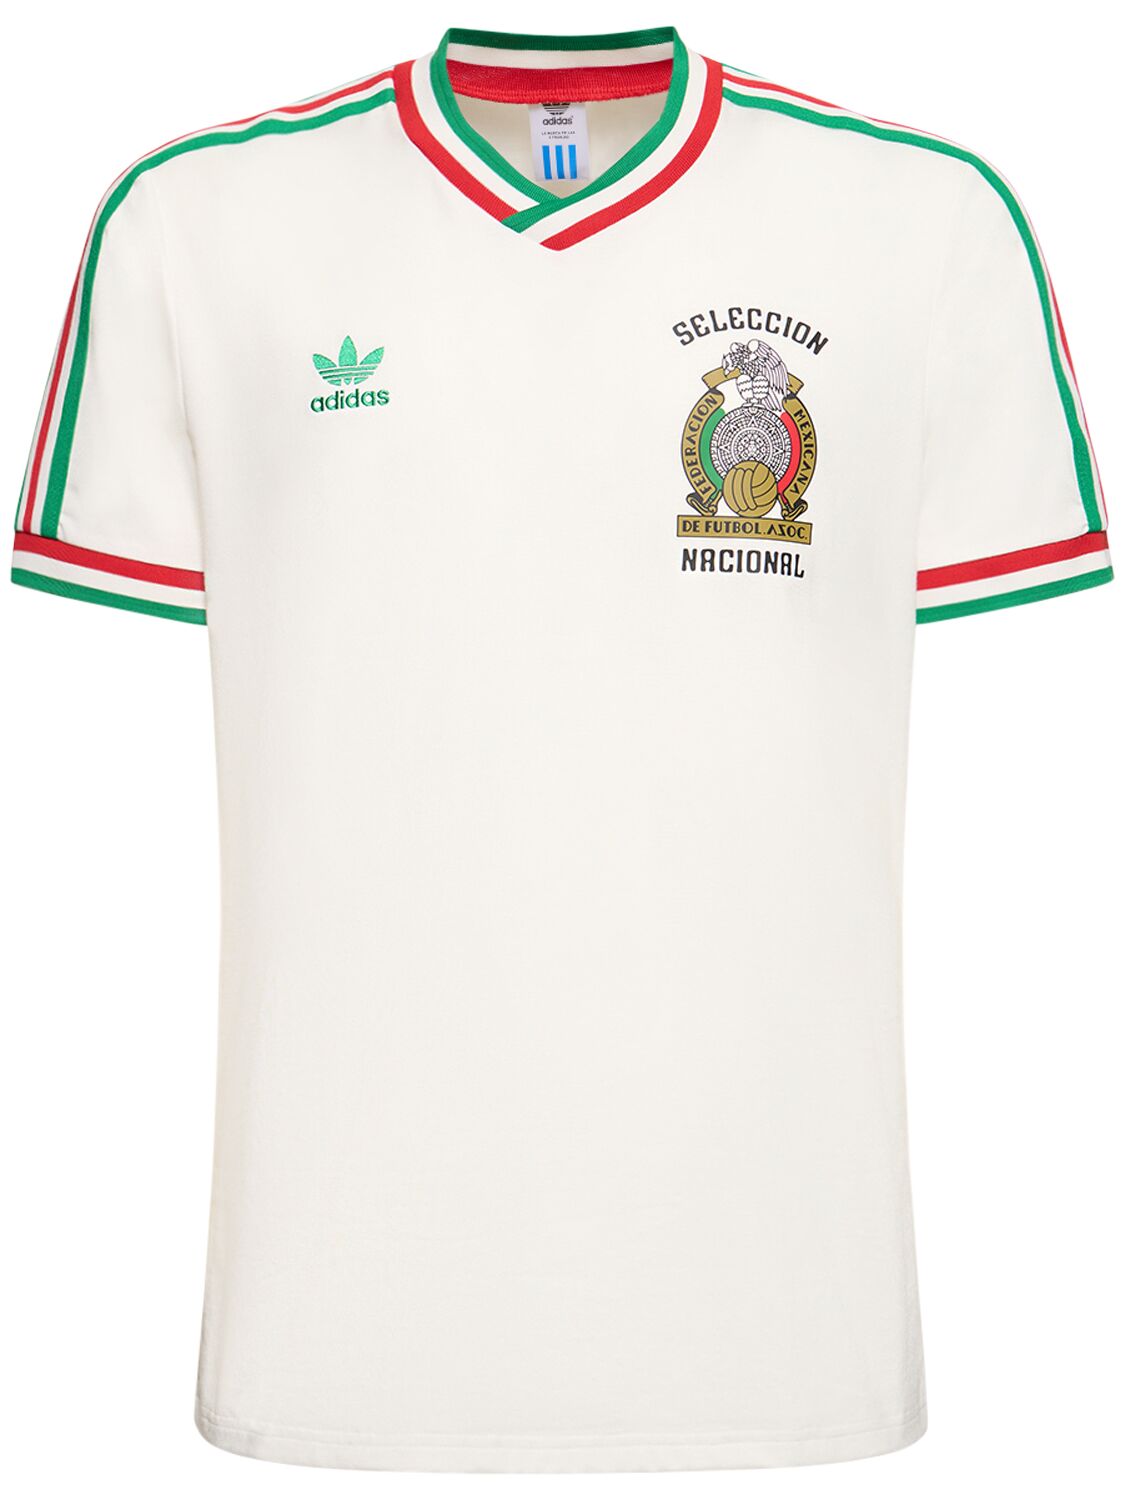 Adidas Originals Mexico 85 Jersey In White